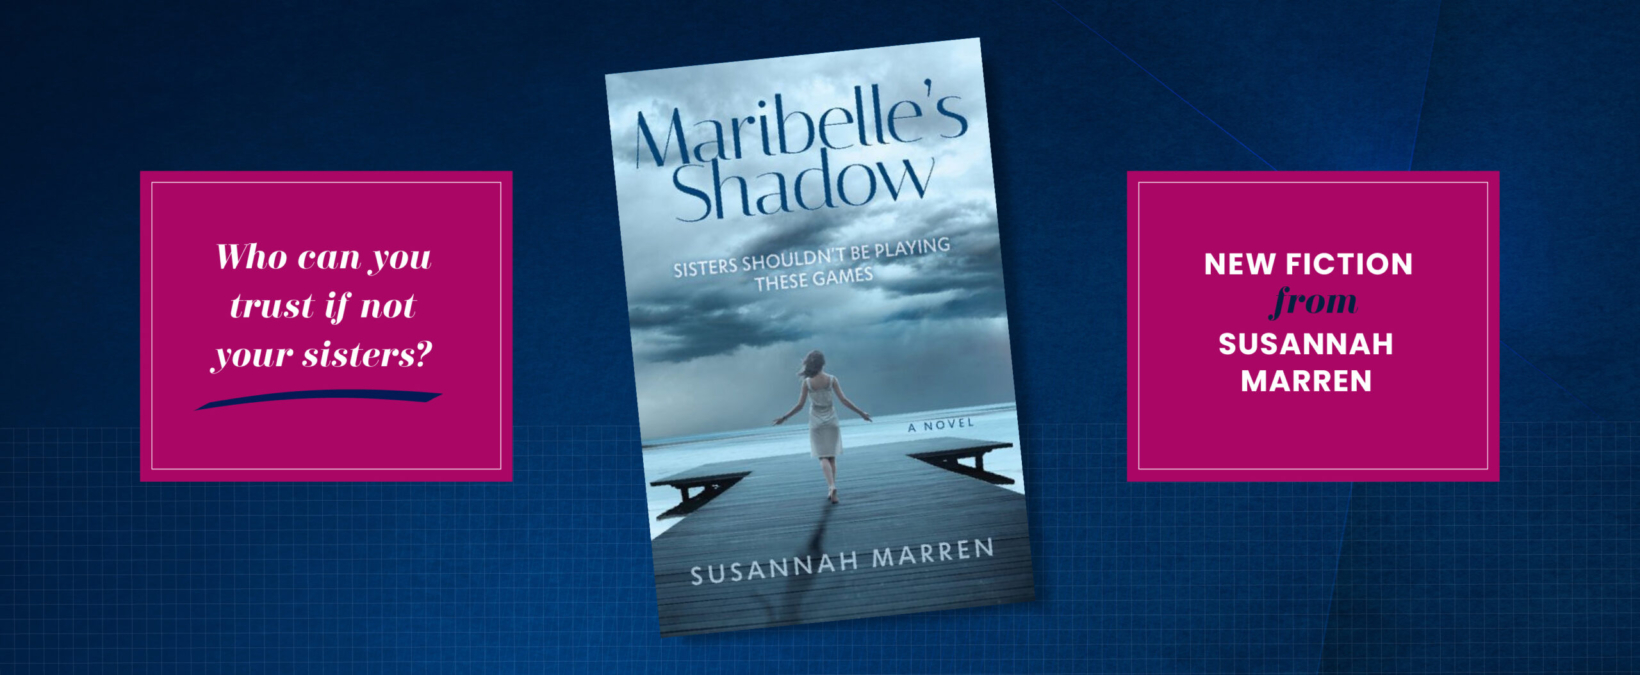 Maribelle's Shadow - New Fiction from Susannah Marren